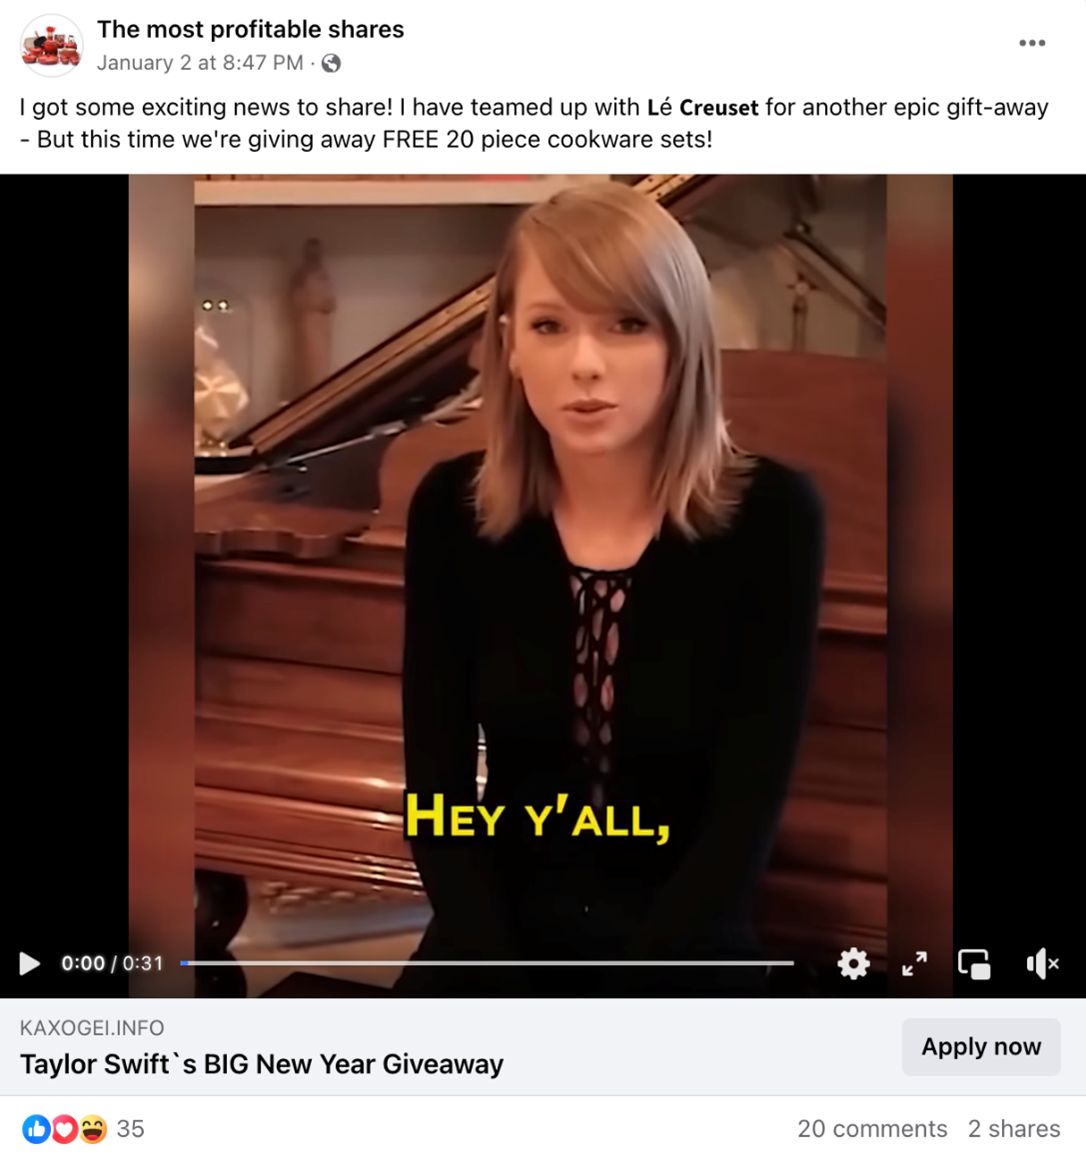 Le Creuset Taylor Swift Giveaway Scam on Facebook